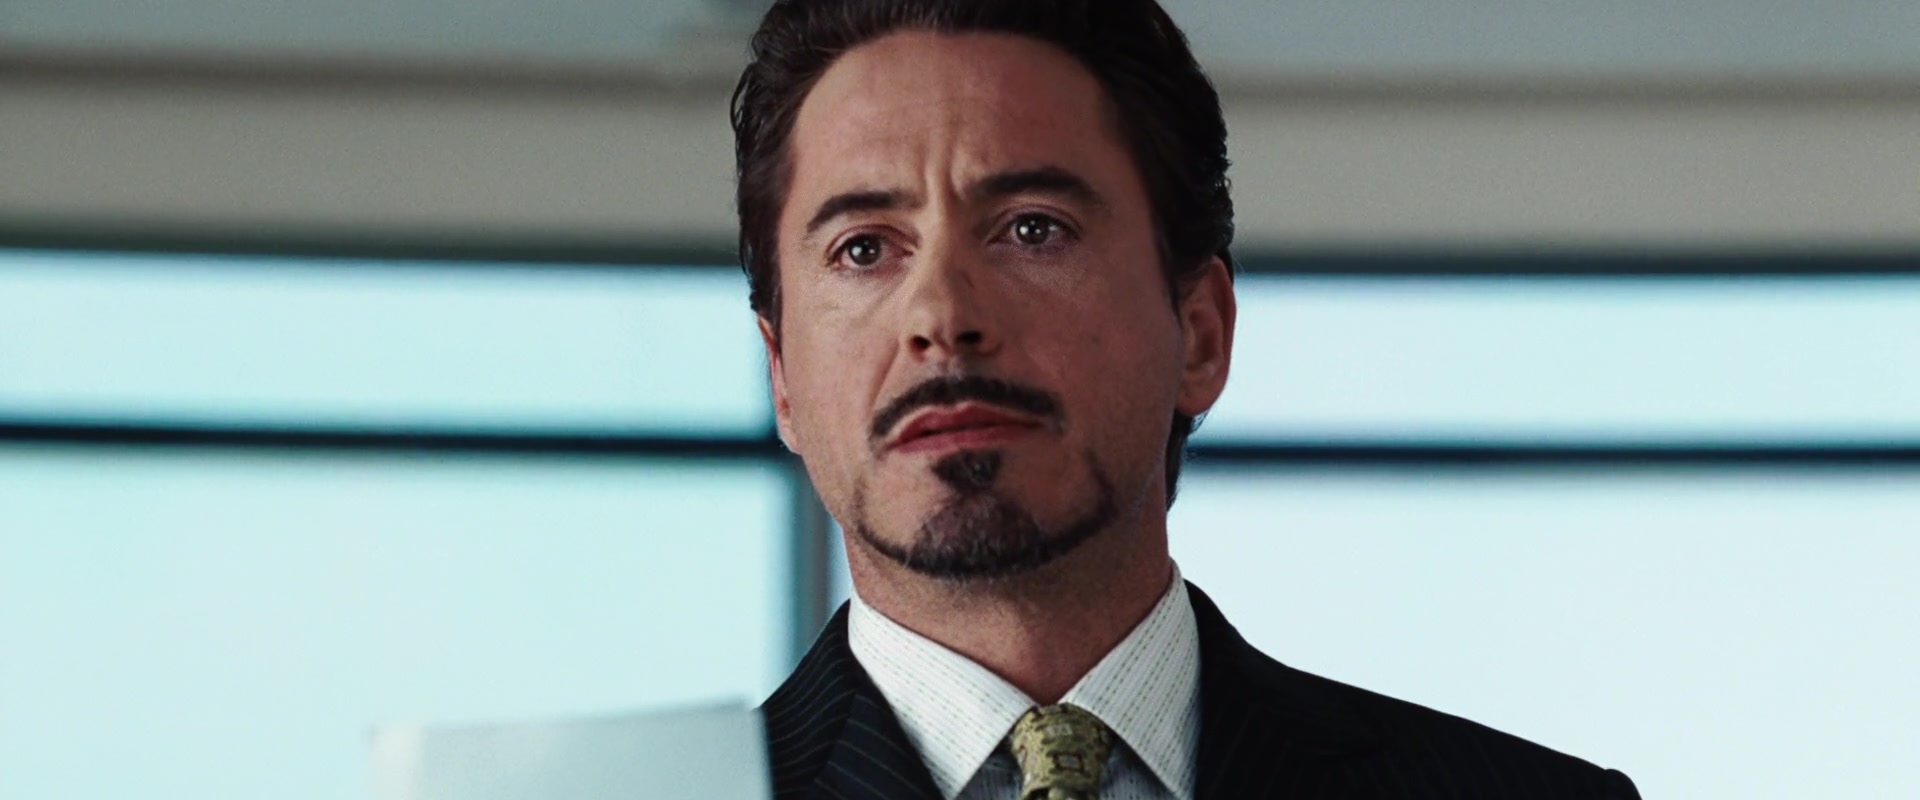 Tony Stark (Robert Downey Jr.) makes a decision about his secret identity in Iron Man (2008), Marvel Entertainment